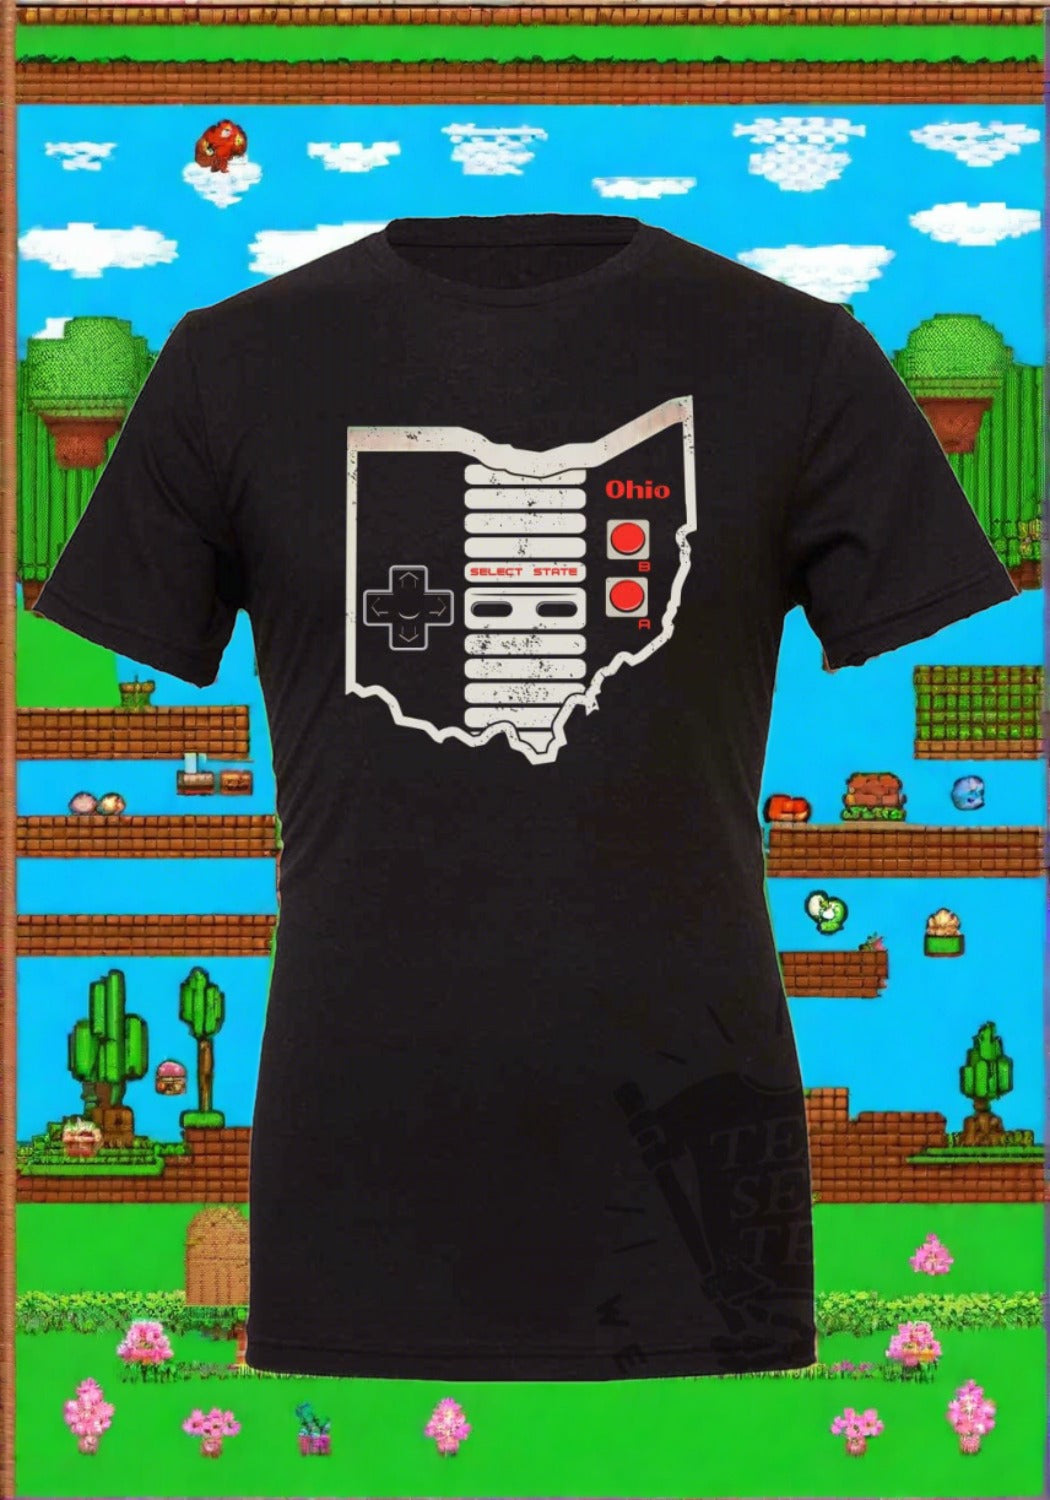 Tee See Tee Men's Apparel Nintend-Ohio™ Unisex T-Shirt | Tee See Tee Exclusive